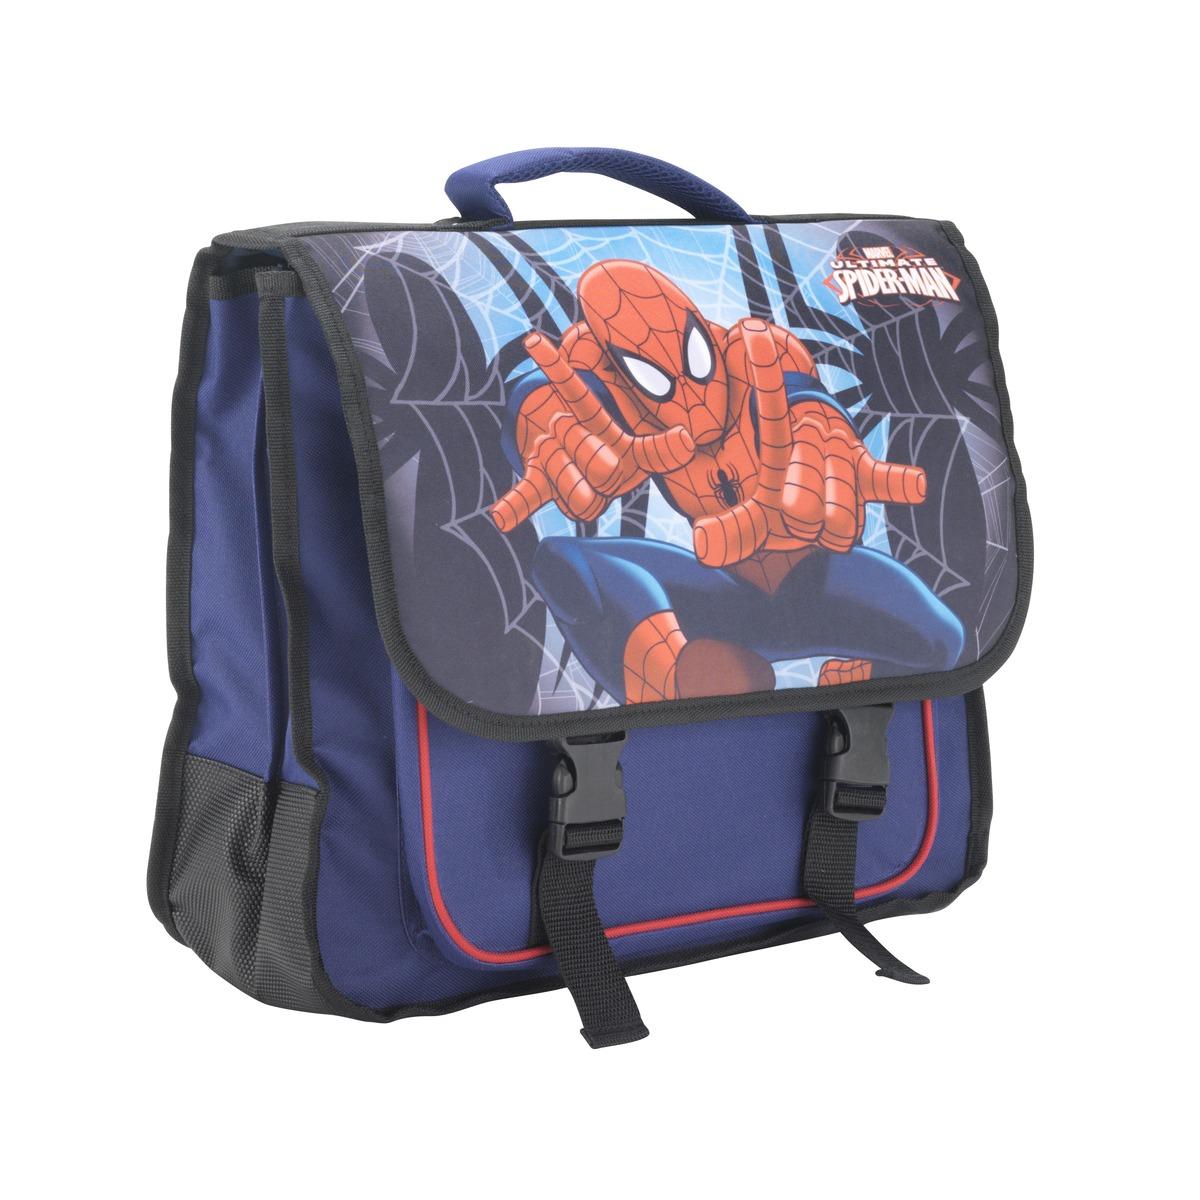 Cartable Spider-man - 38 x 31 x 13 cm - Bleu, rouge